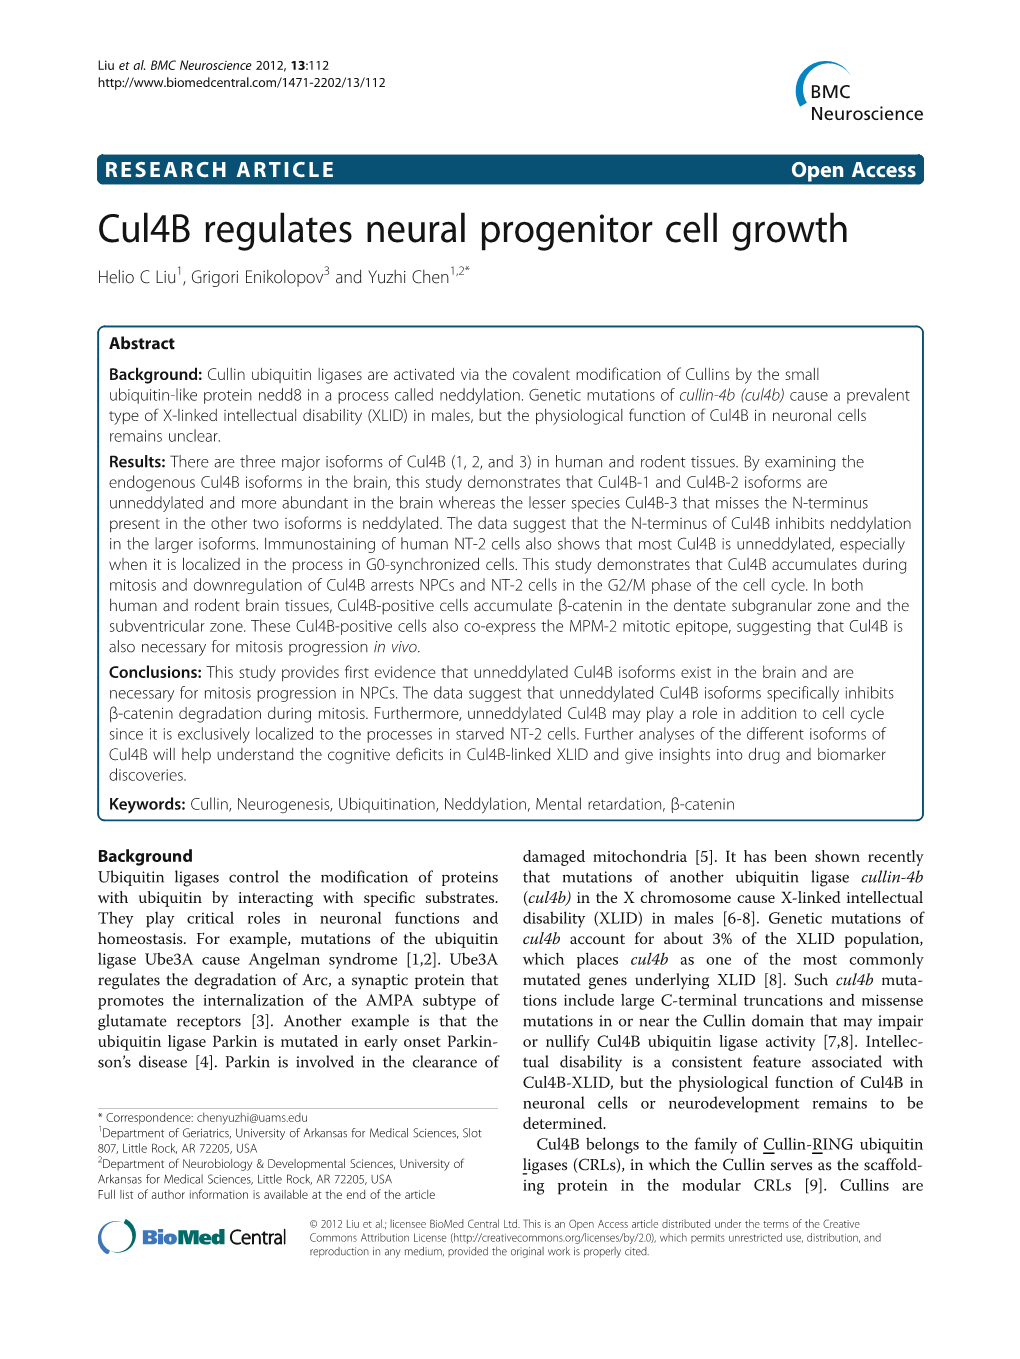 Cul4b Regulates Neural Progenitor Cell Growth Helio C Liu1, Grigori Enikolopov3 and Yuzhi Chen1,2*